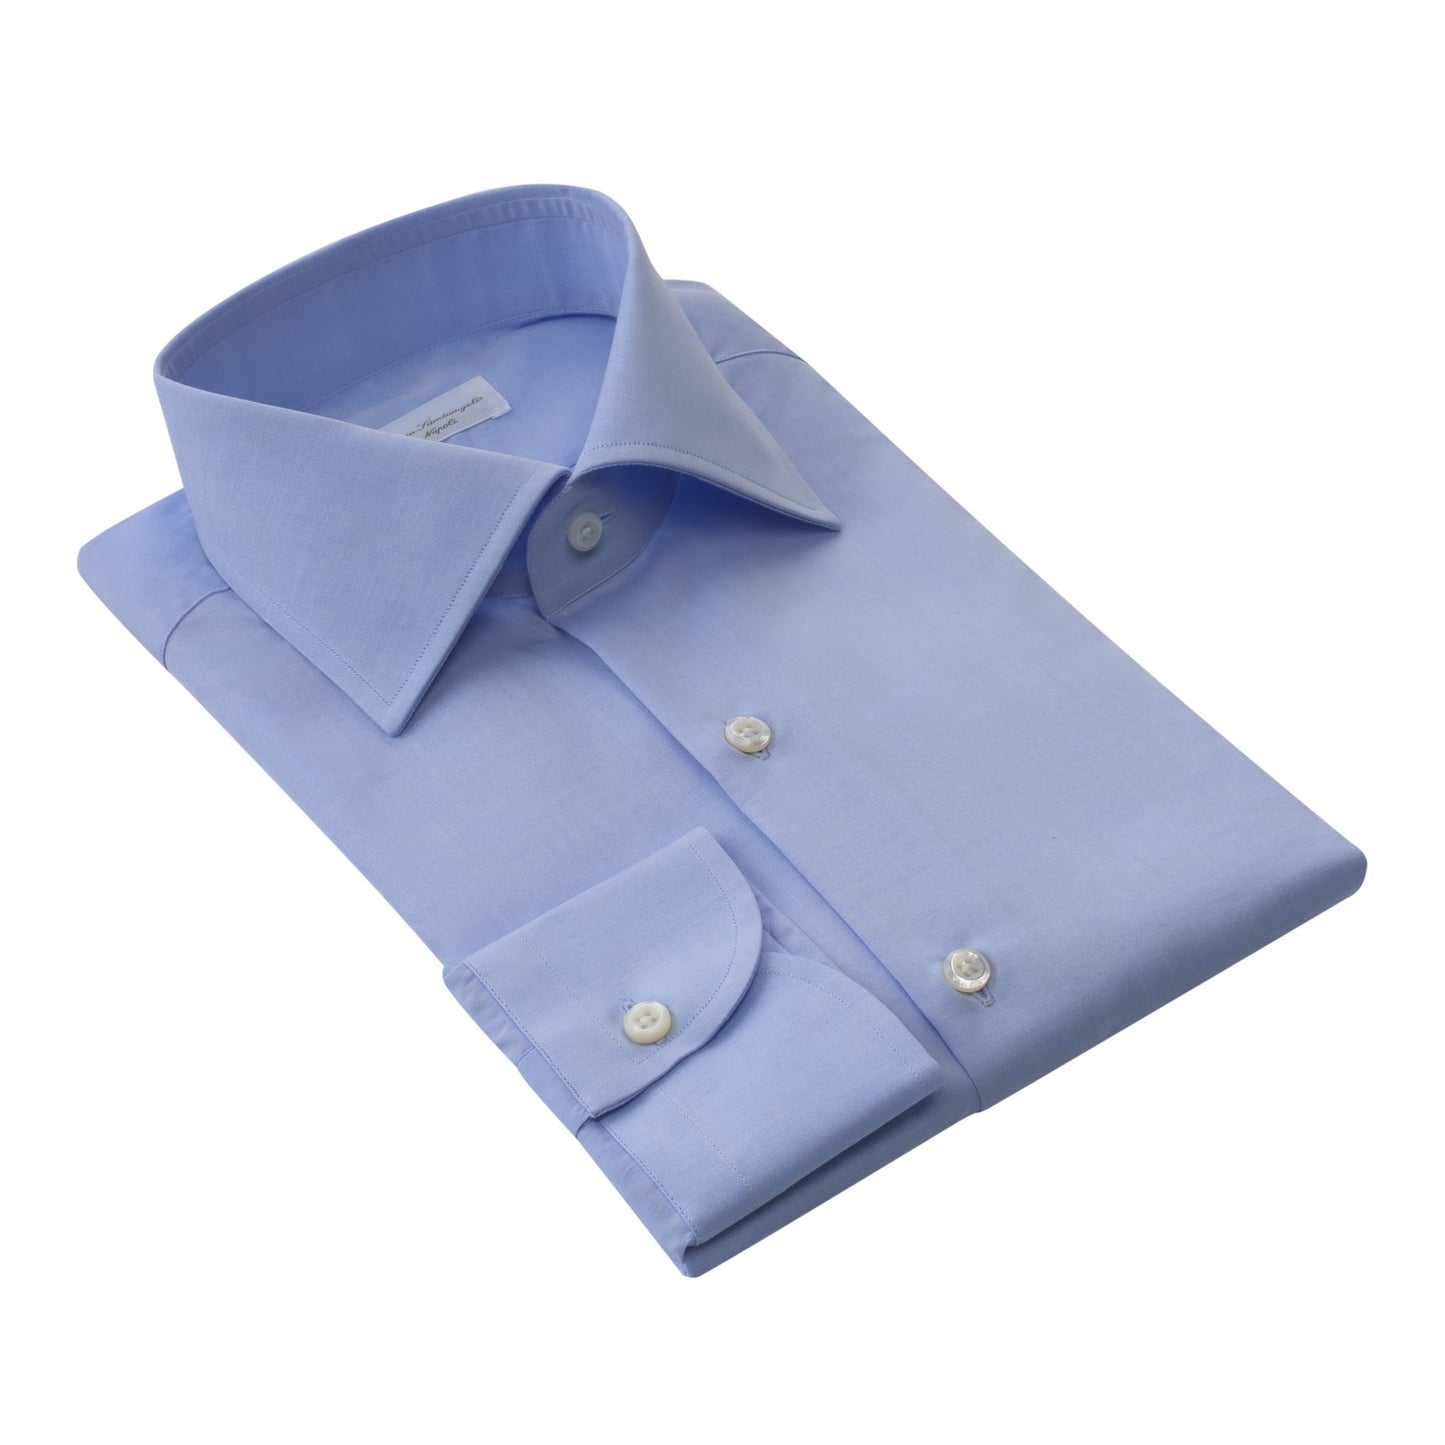 Maria Santangelo Classic Cotton Shirt in Light Blue - SARTALE